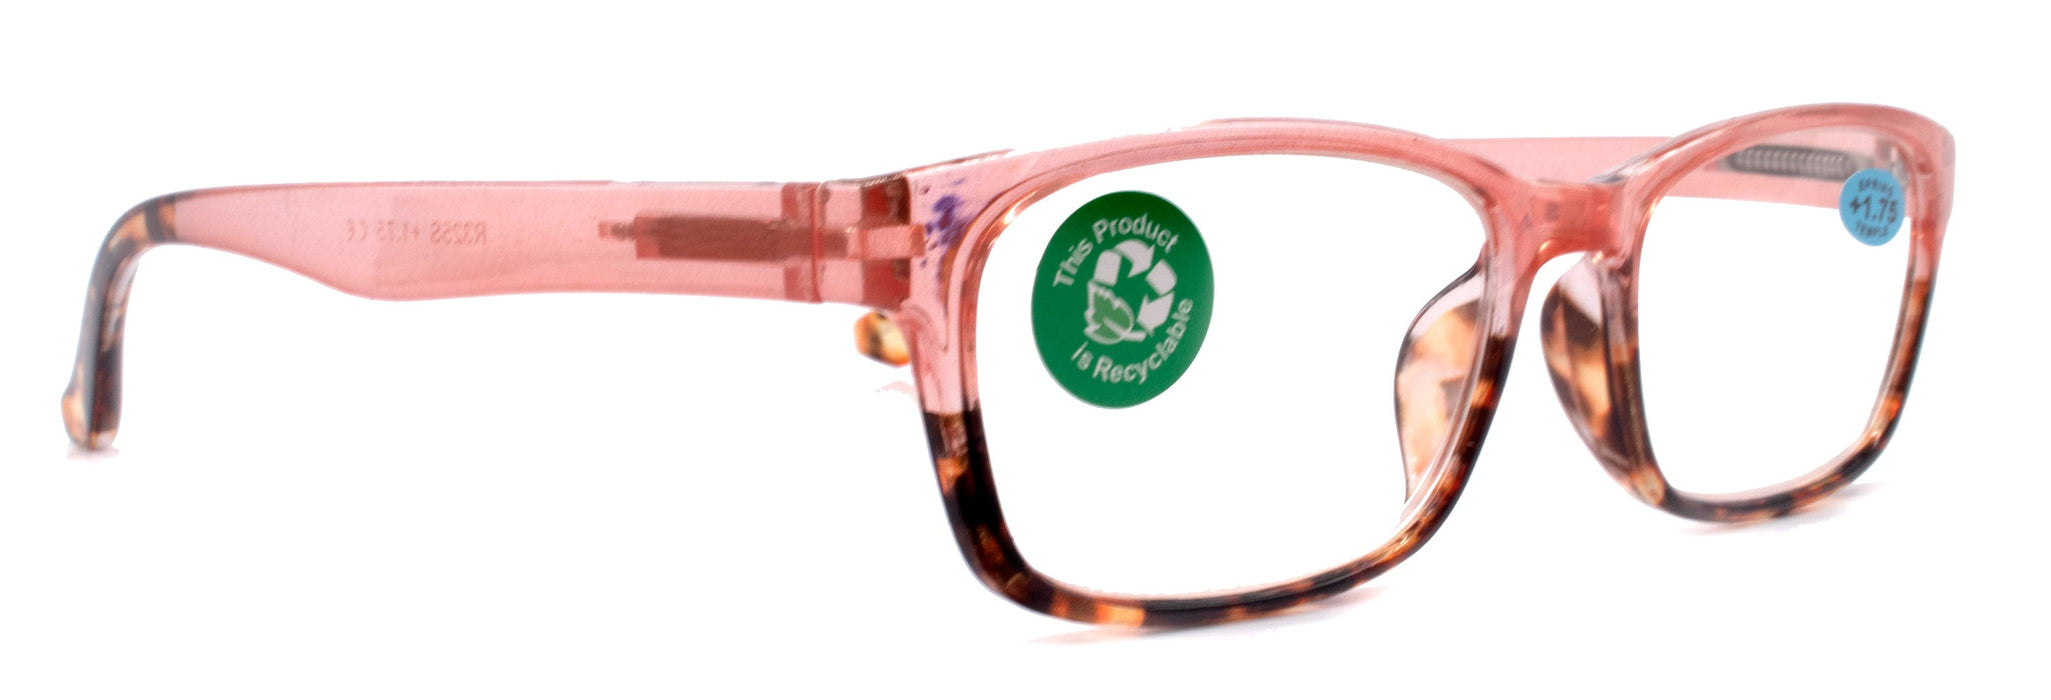 Desiree, (Premium) Reading Glasses, High End Reader +1.25..+3 Magnifying Wayfarer Style (Pink Tortoise Brown) Optical Frame. NY Fifth Avenue